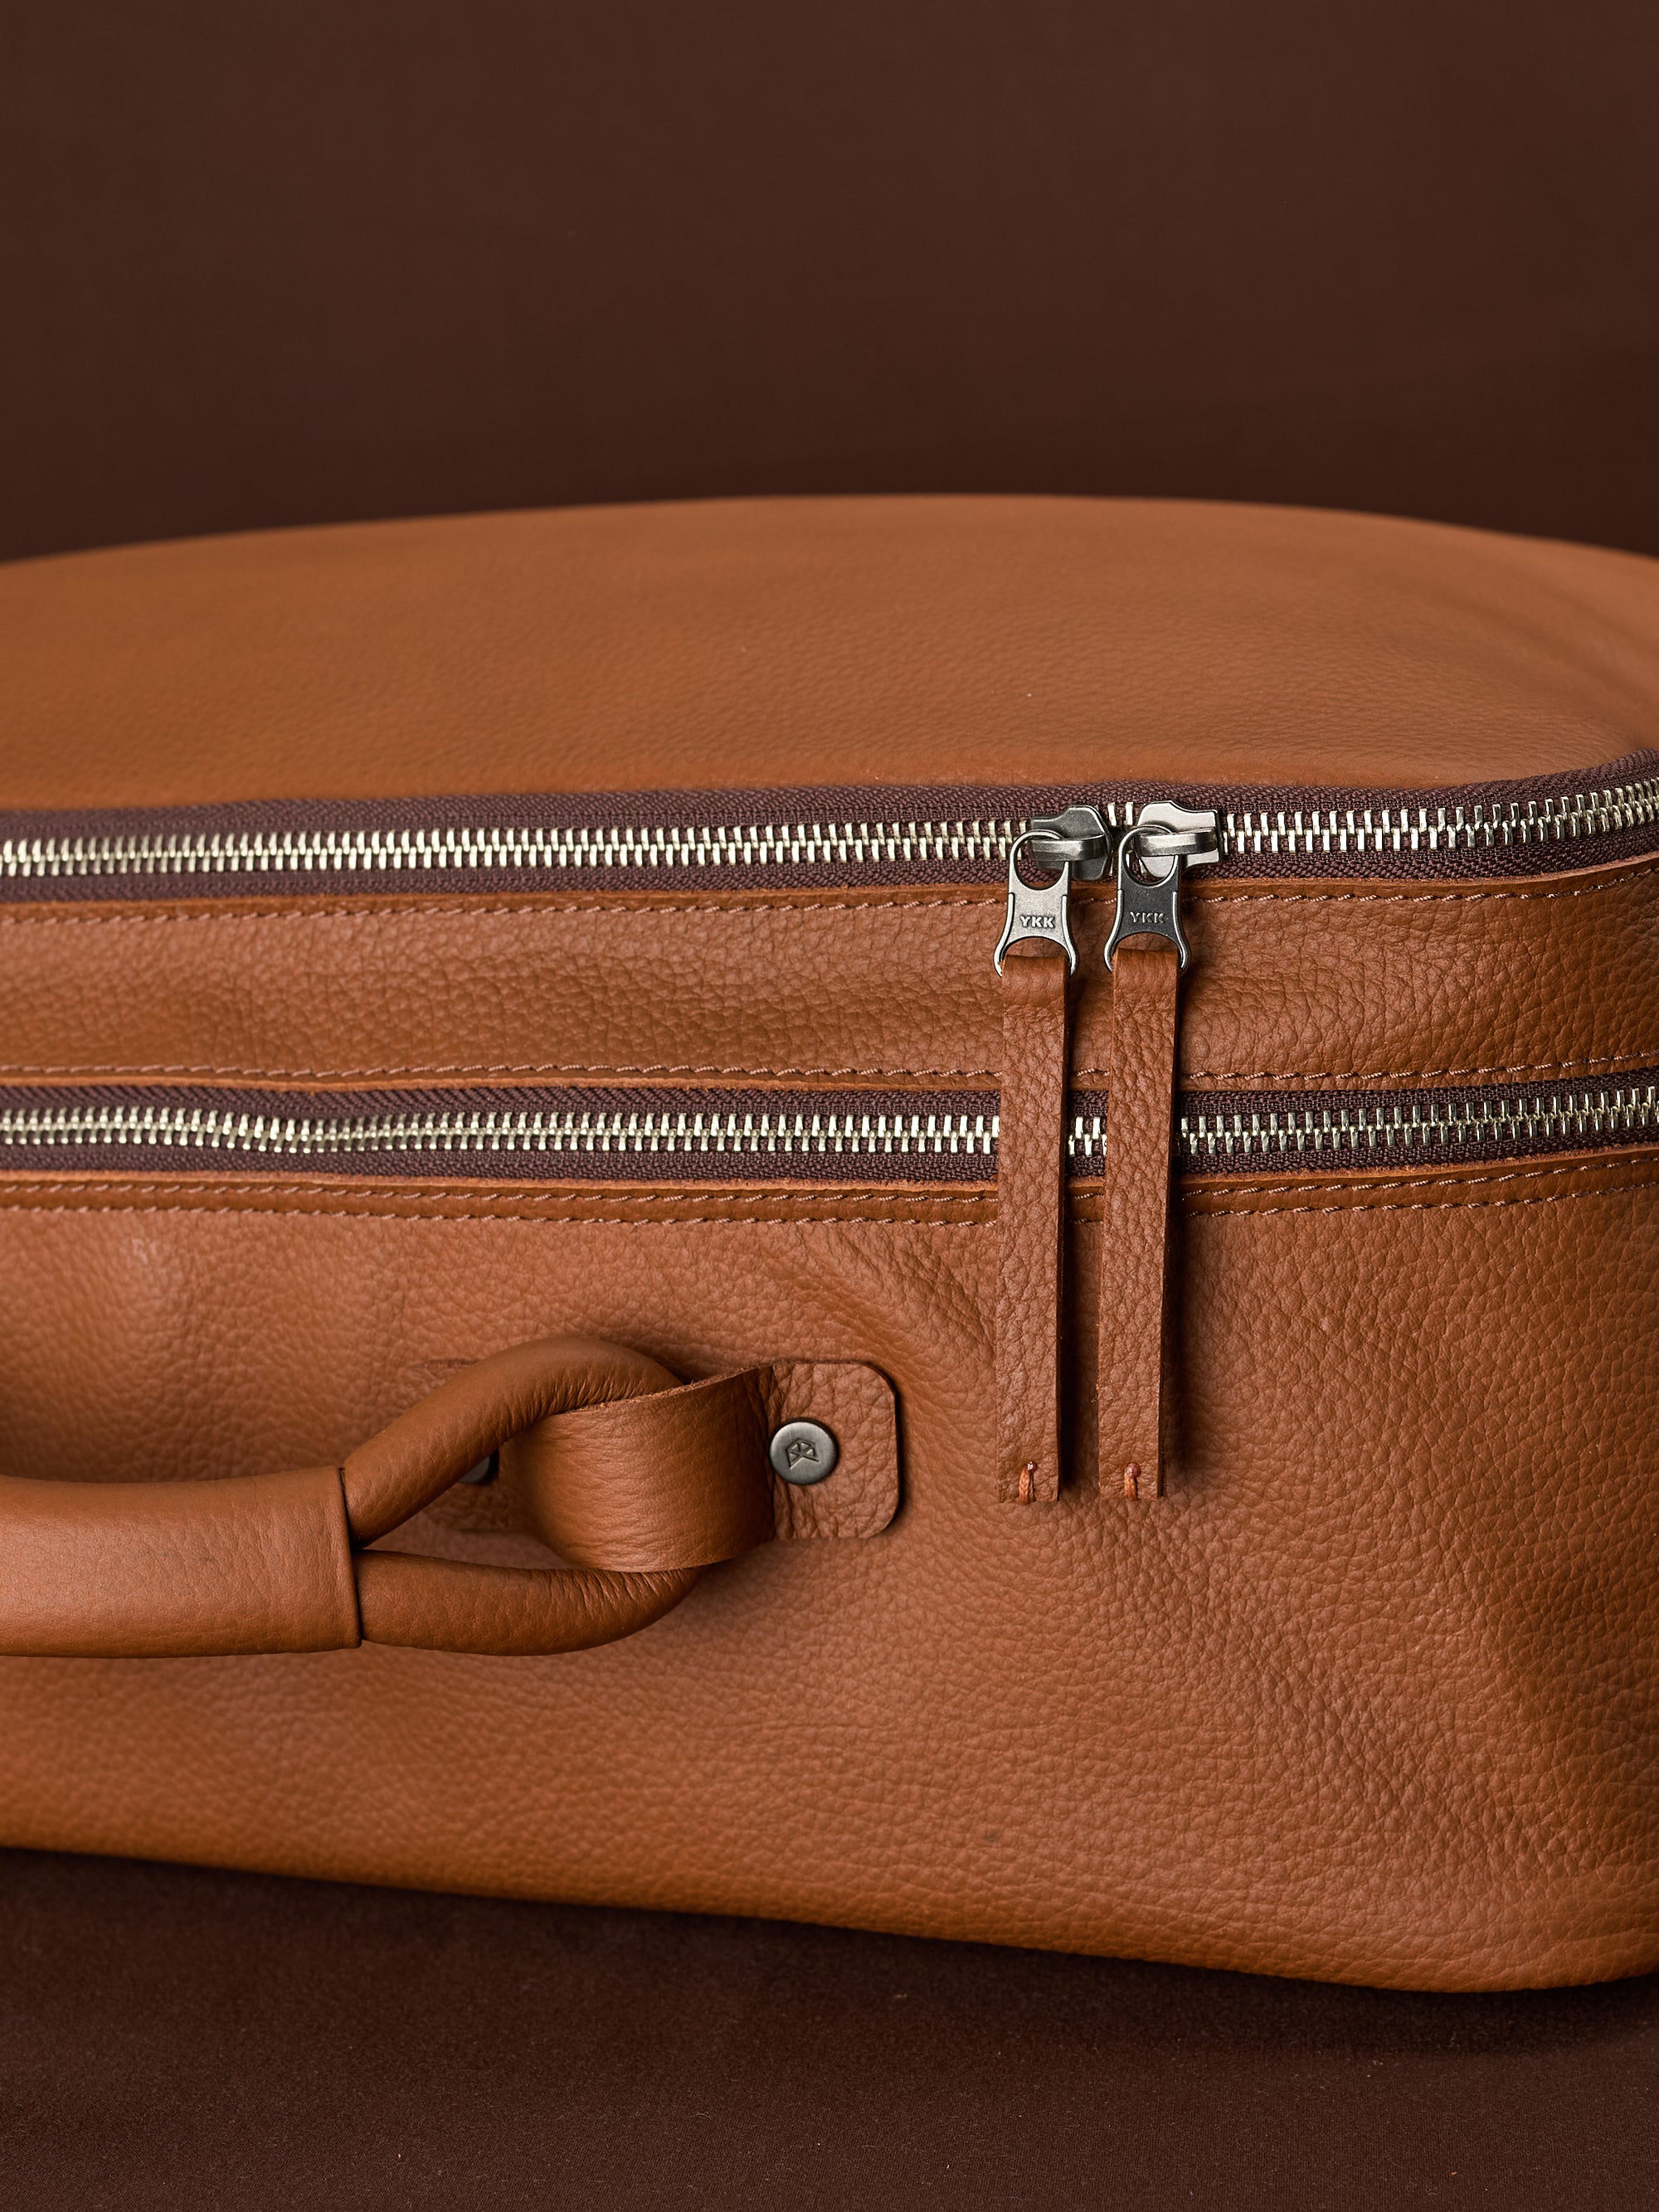 Pulled Tabs. Weekender Bag for Men Tan by Capra Leather